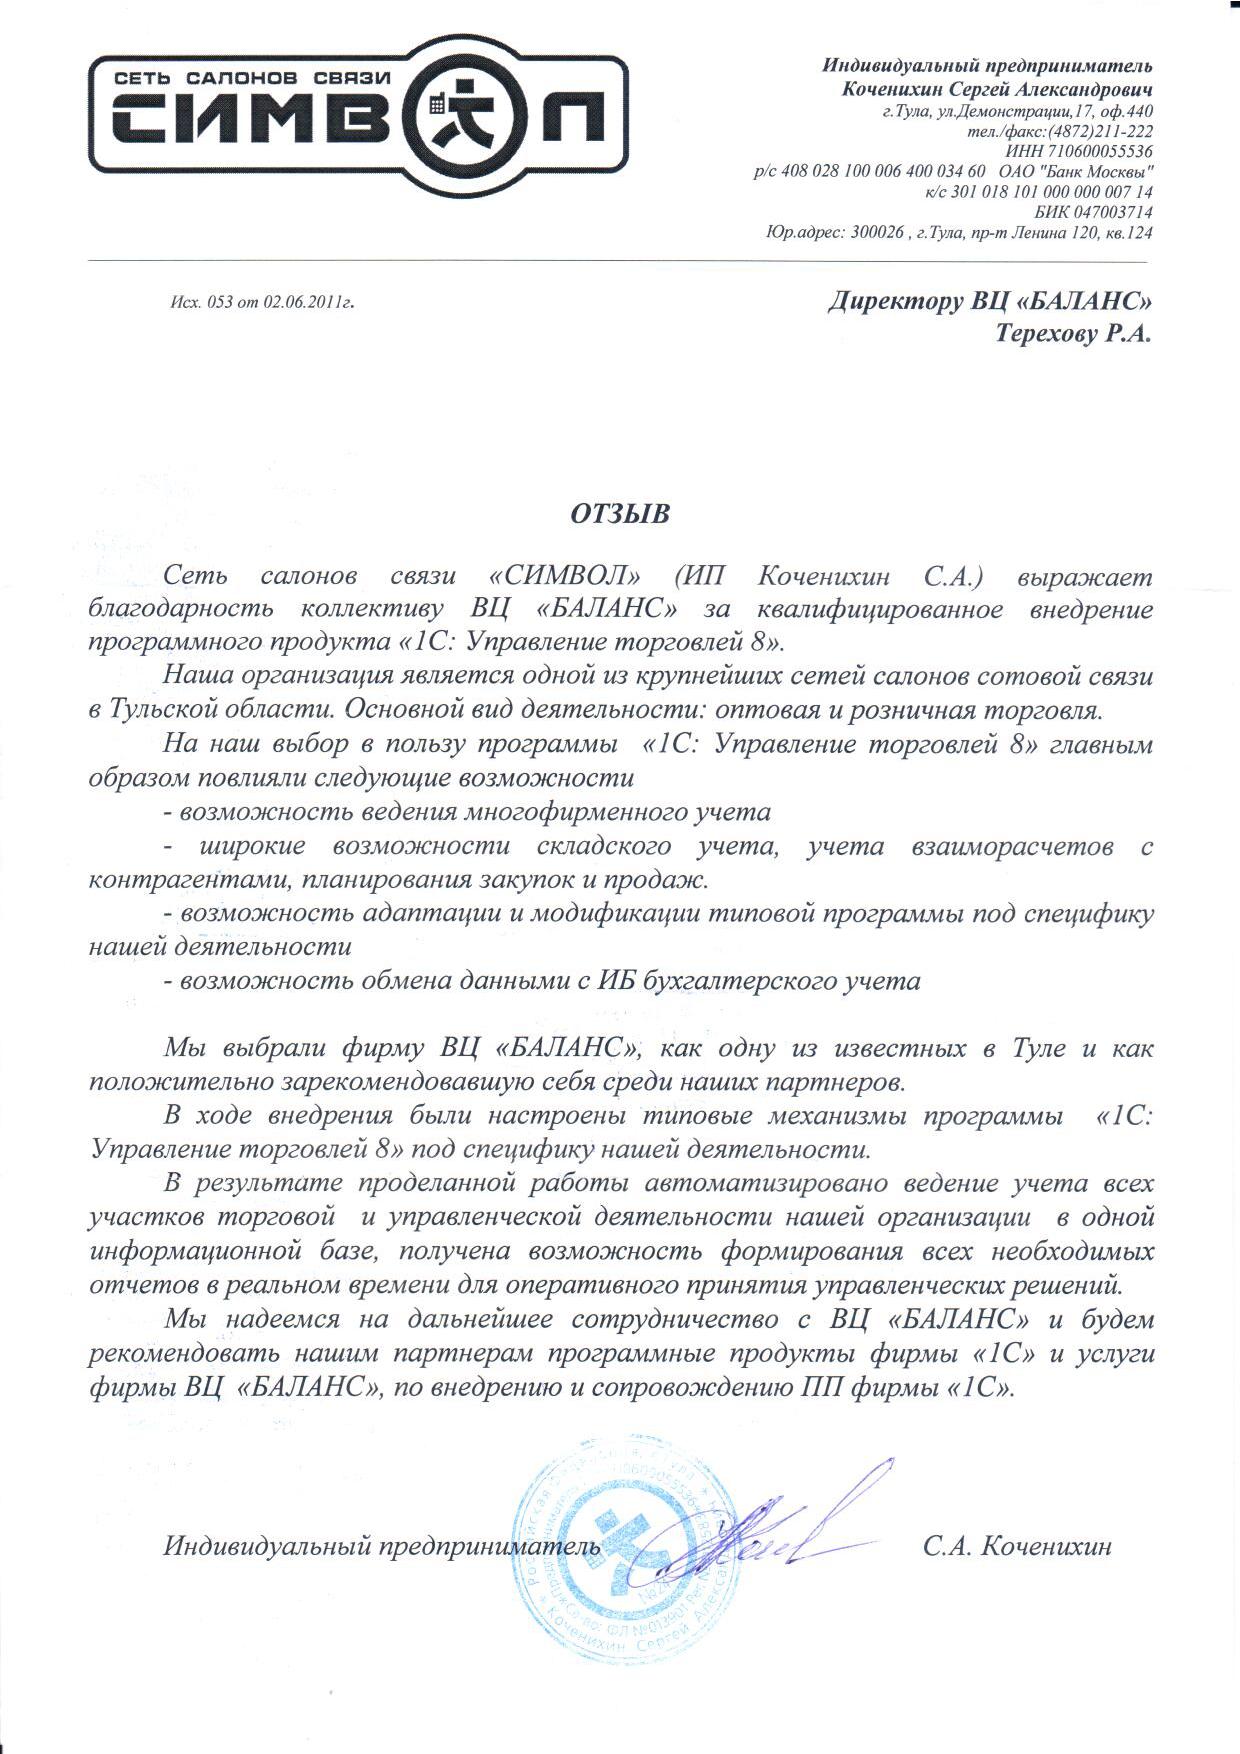 Сеть салонов связи "СИМВОЛ" (ИП Коченихин С. А. 2011 год) 